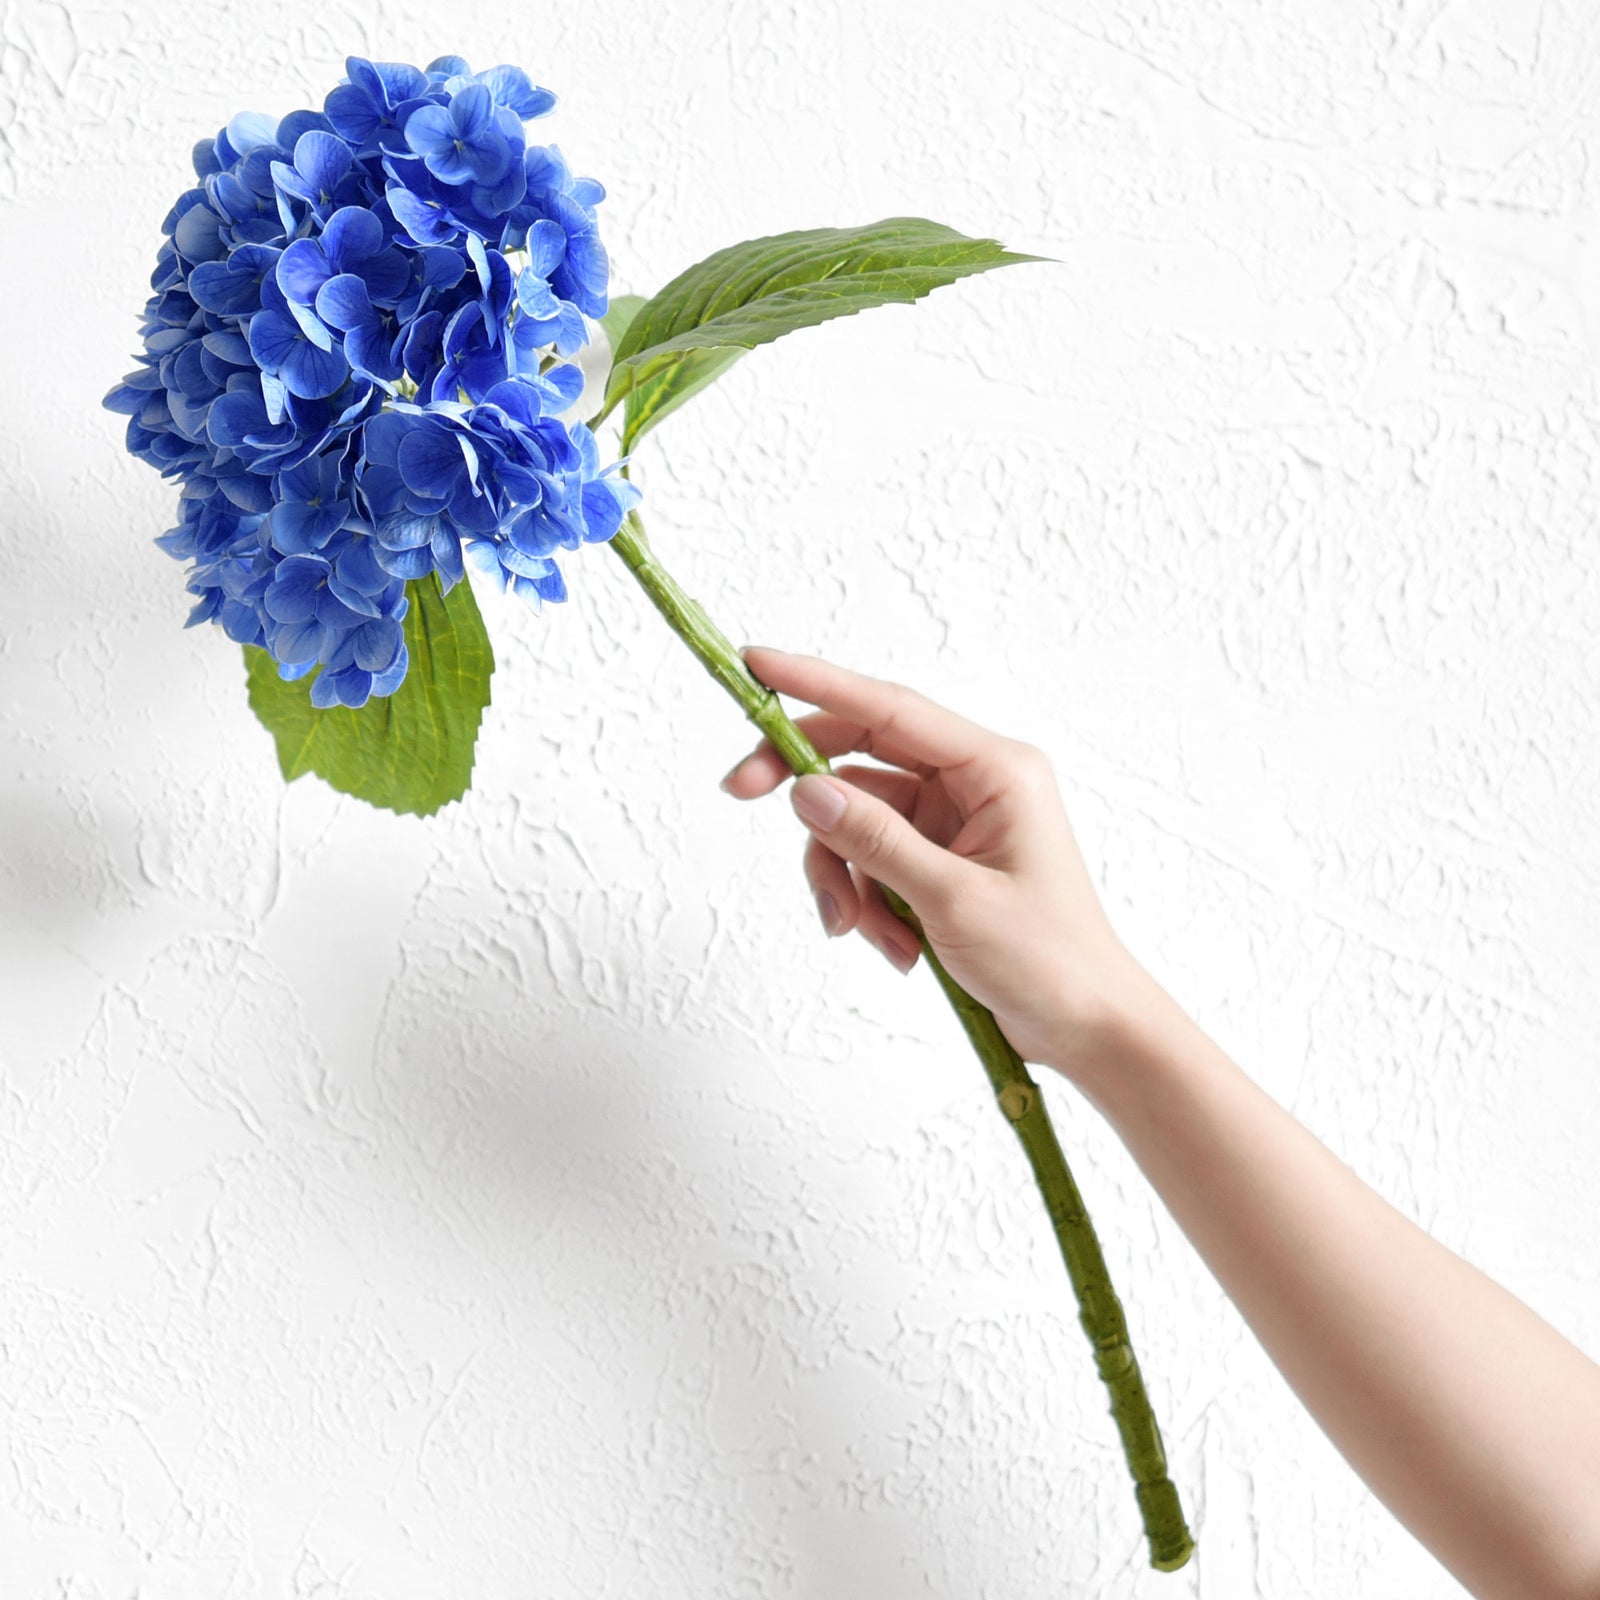 FiveSeasonStuff 2 Stems Real Touch Petals and Leaves Artificial Hydrangea Flowers Long Stem Floral Arrangement | for Wedding Bridal Party Home Décor DIY Floral Decoration (Blue Ocean)